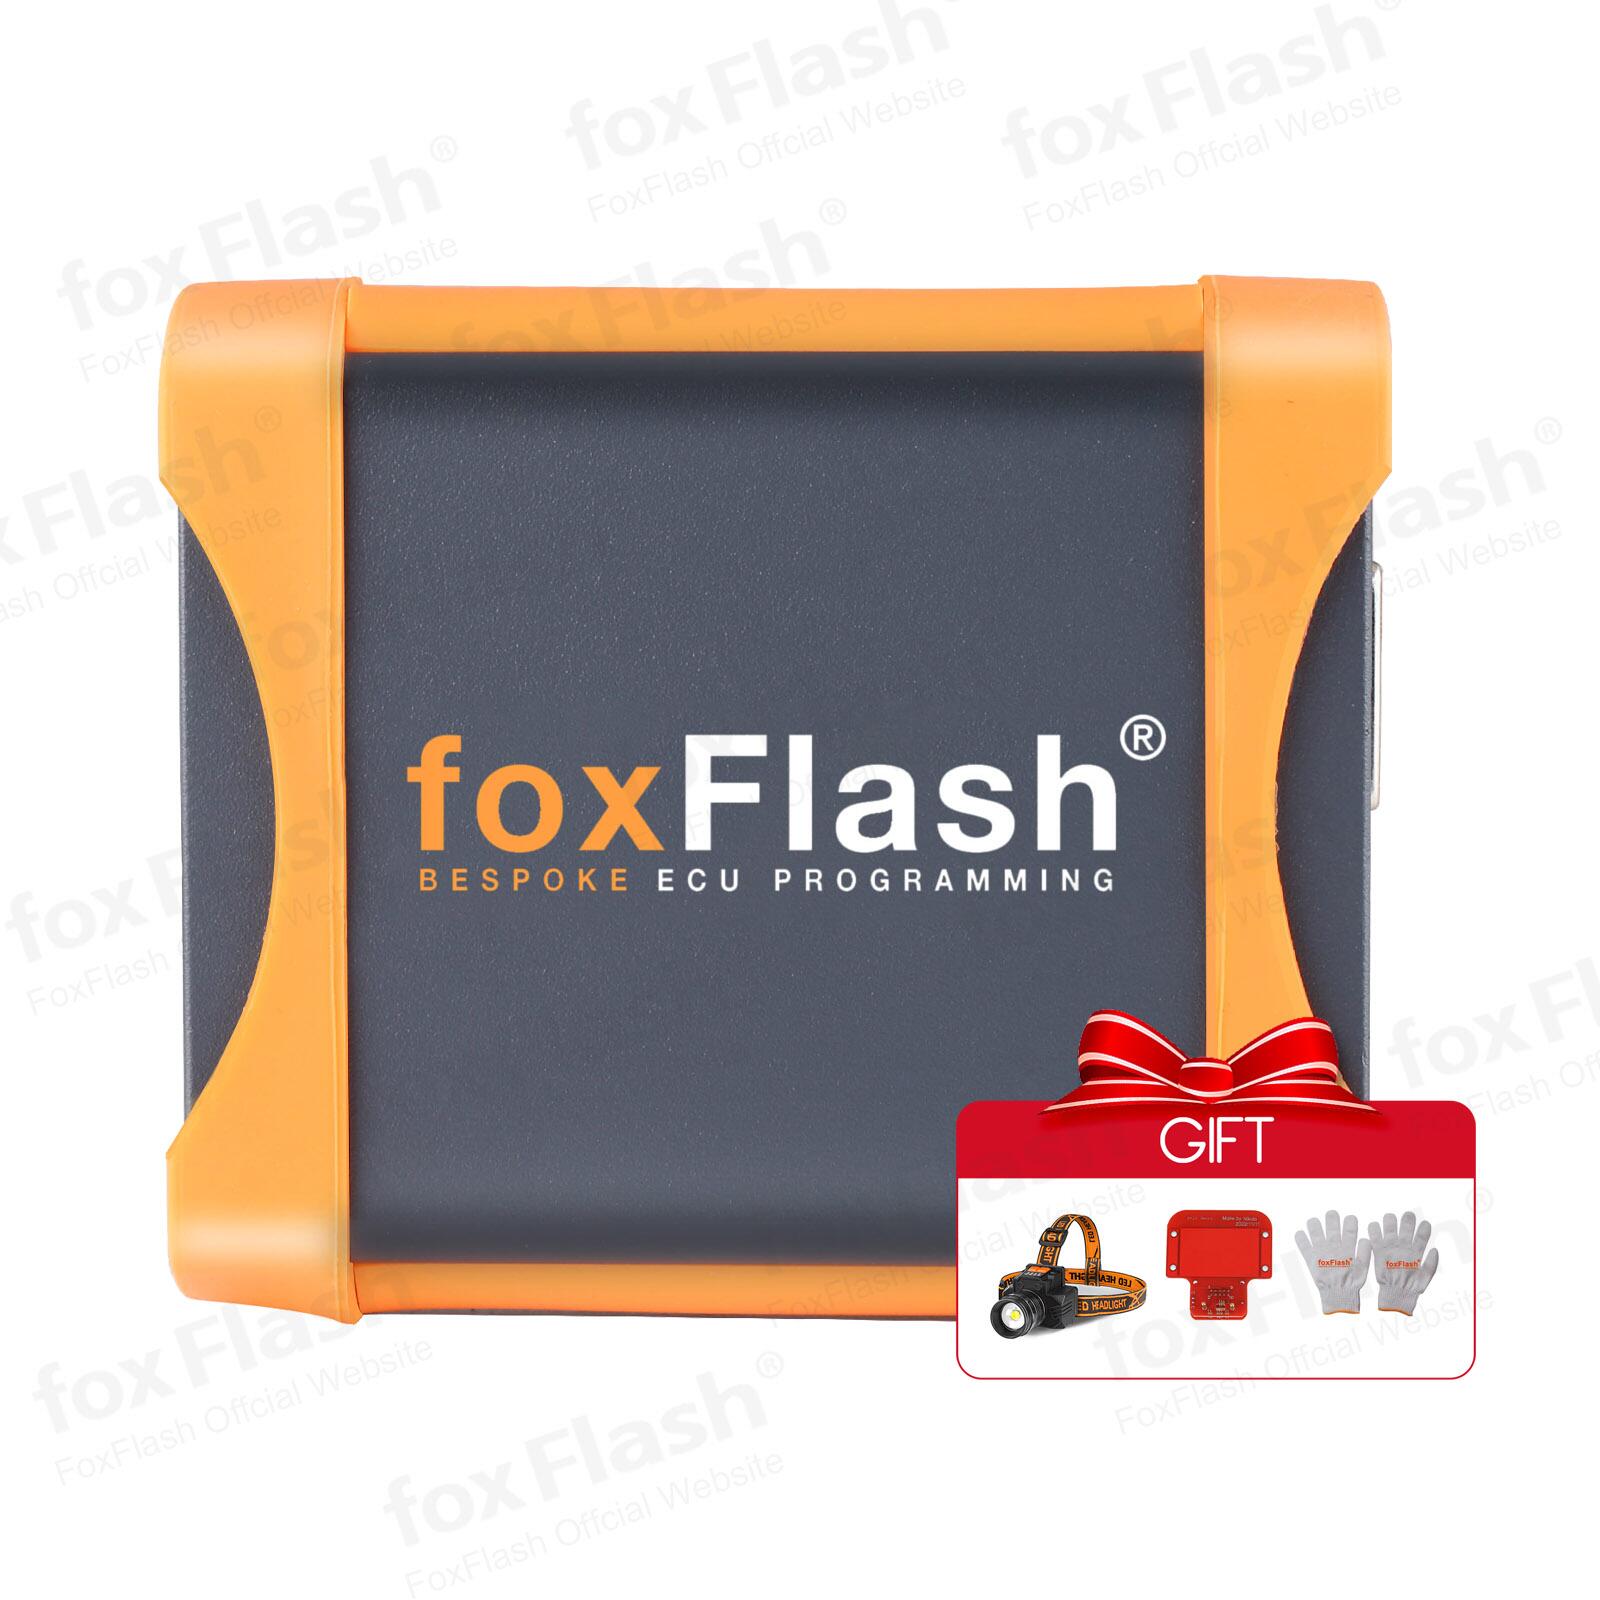 foxflash